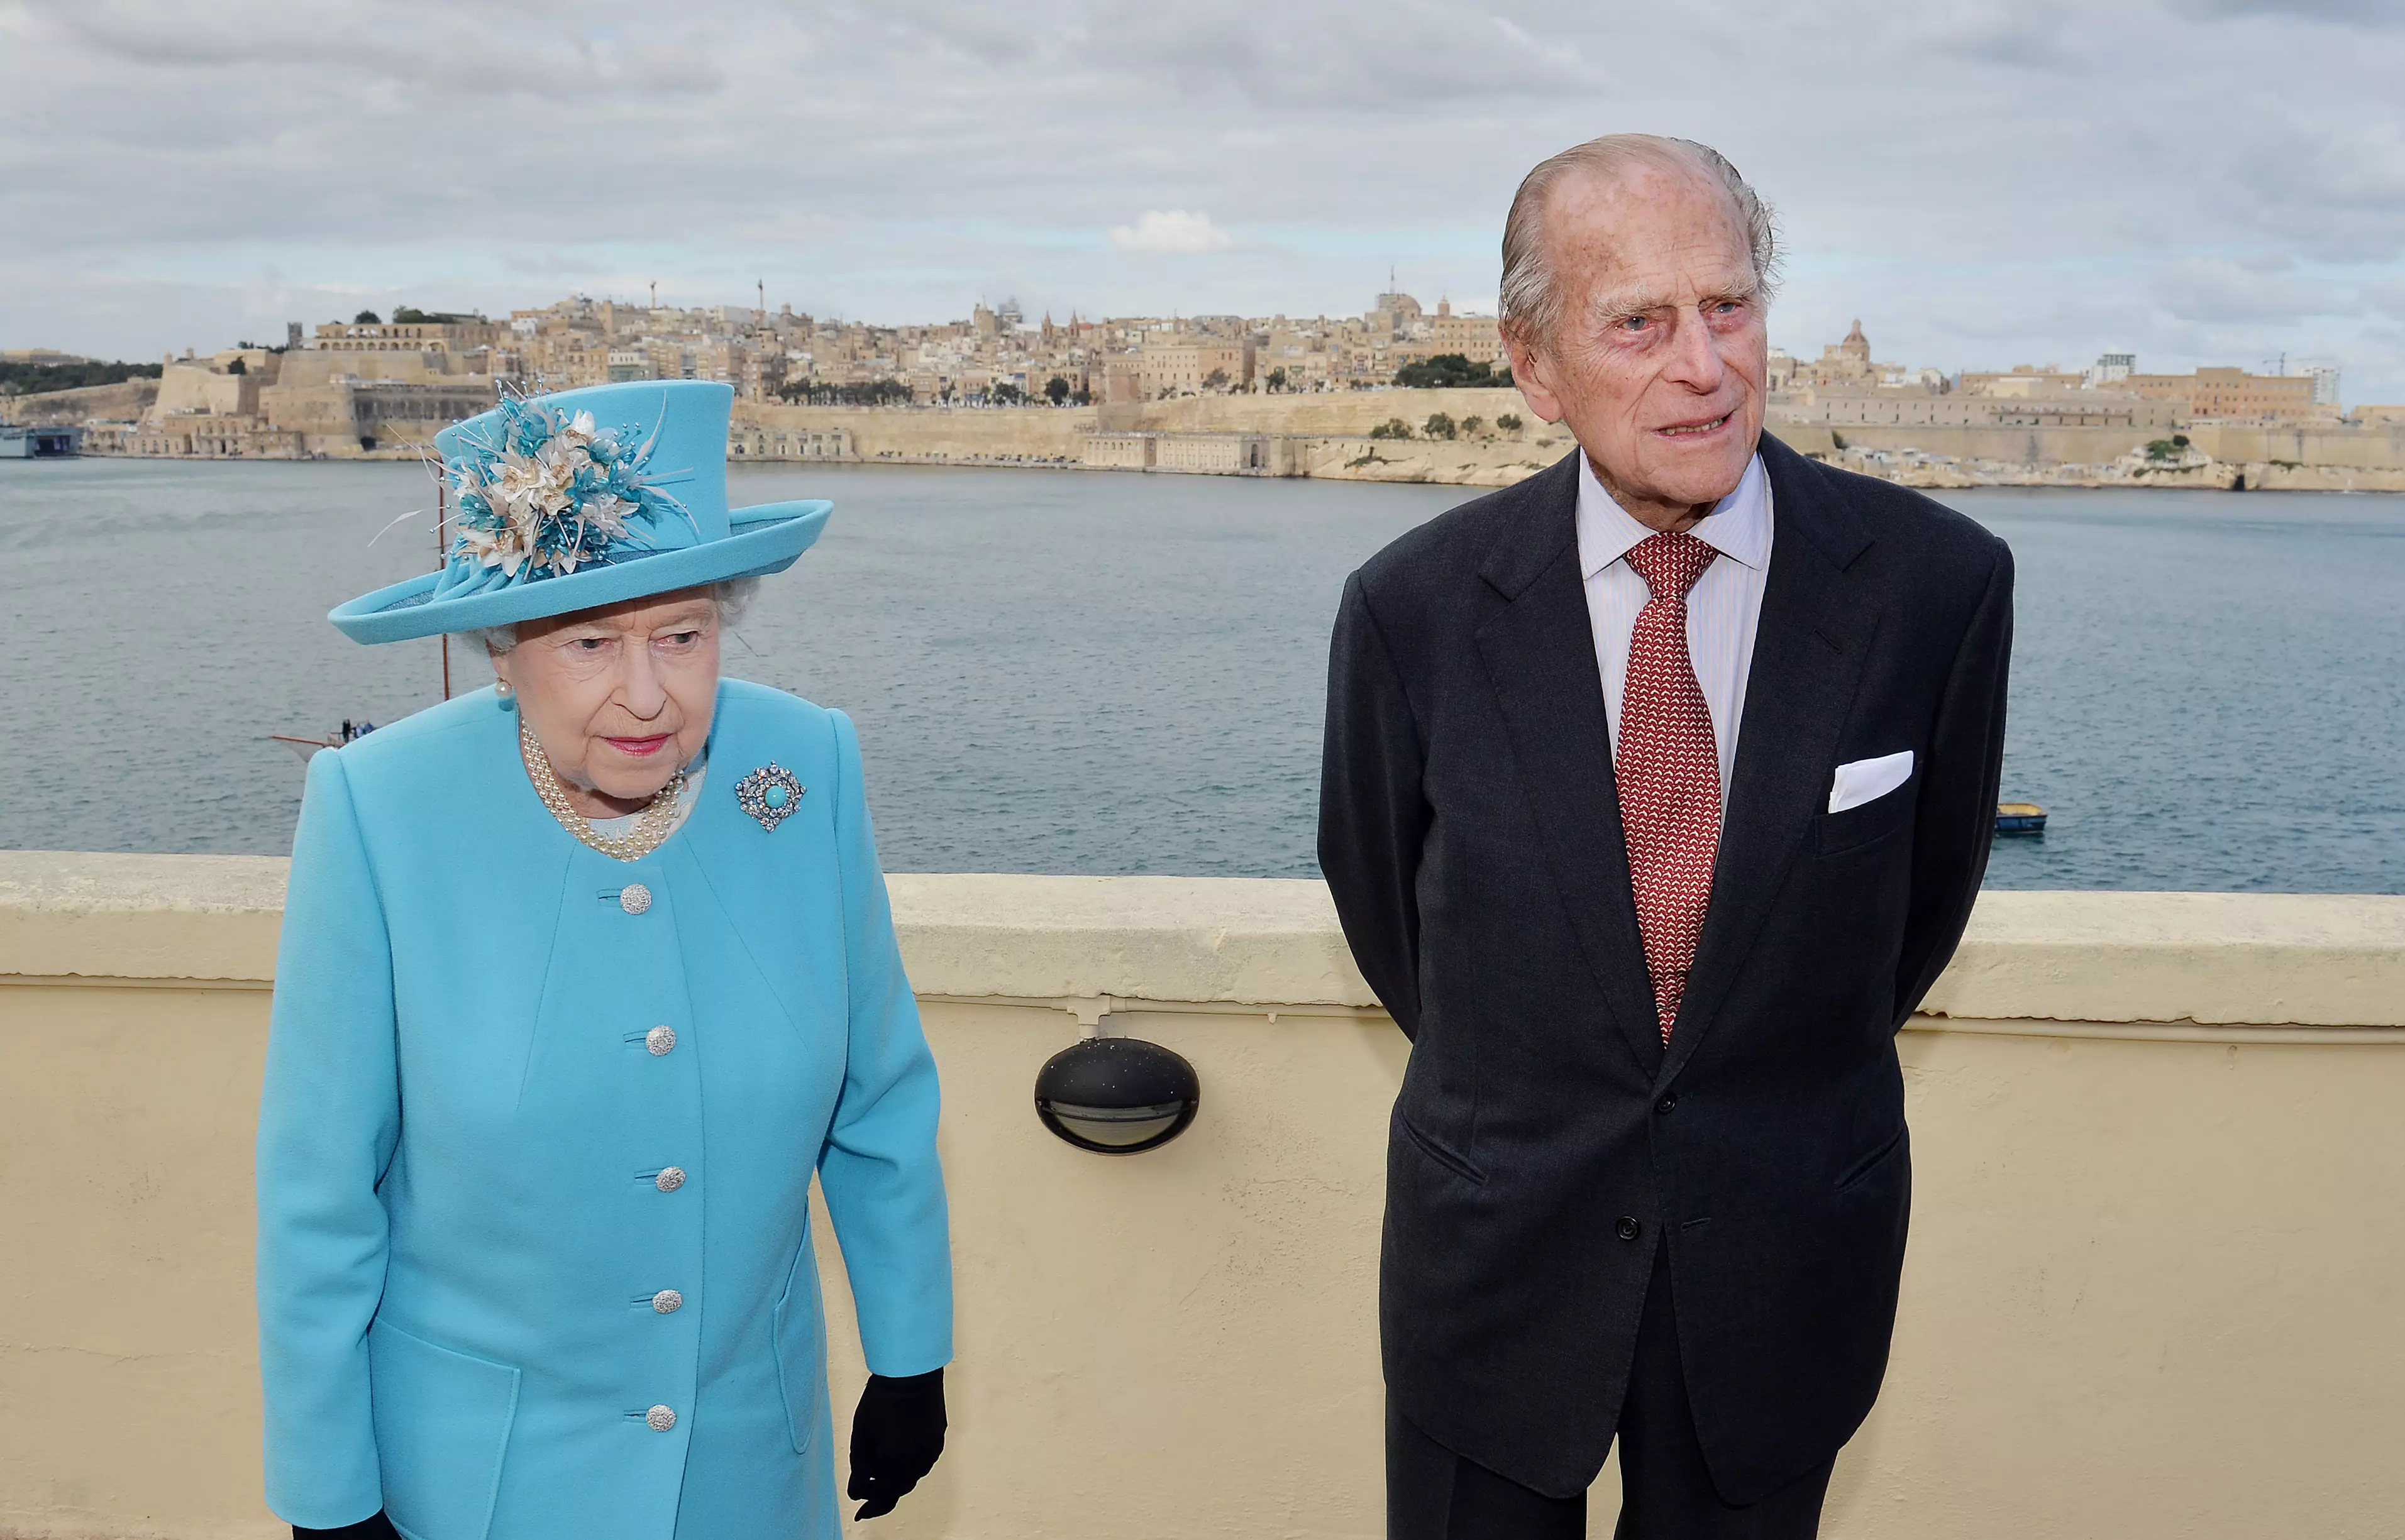 The Queen and Duke of Edinburgh visiting Malta in 2015.